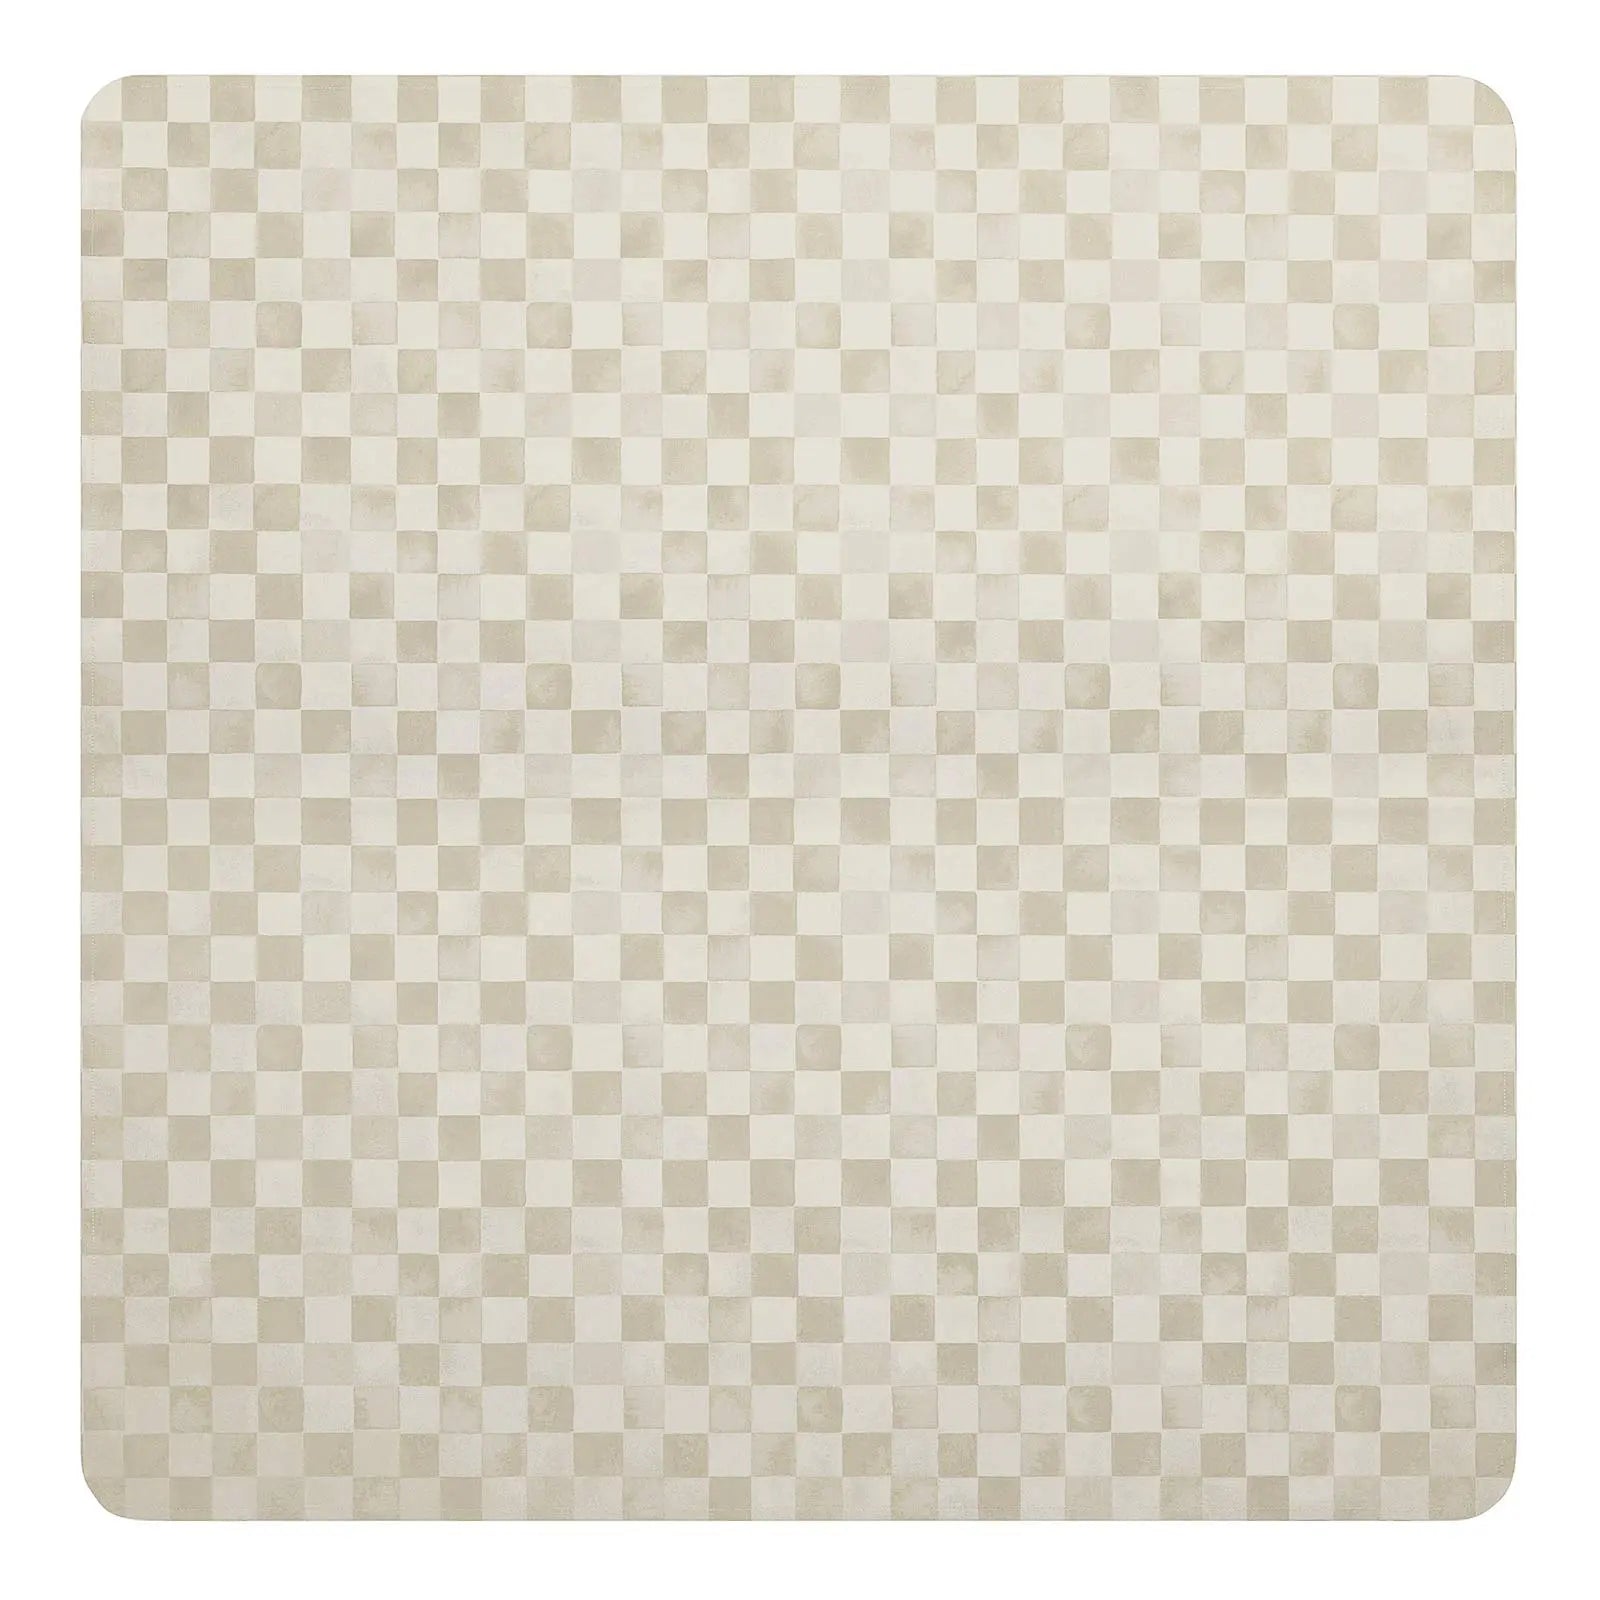 Checker almond tonal beige geometric print high chair mat